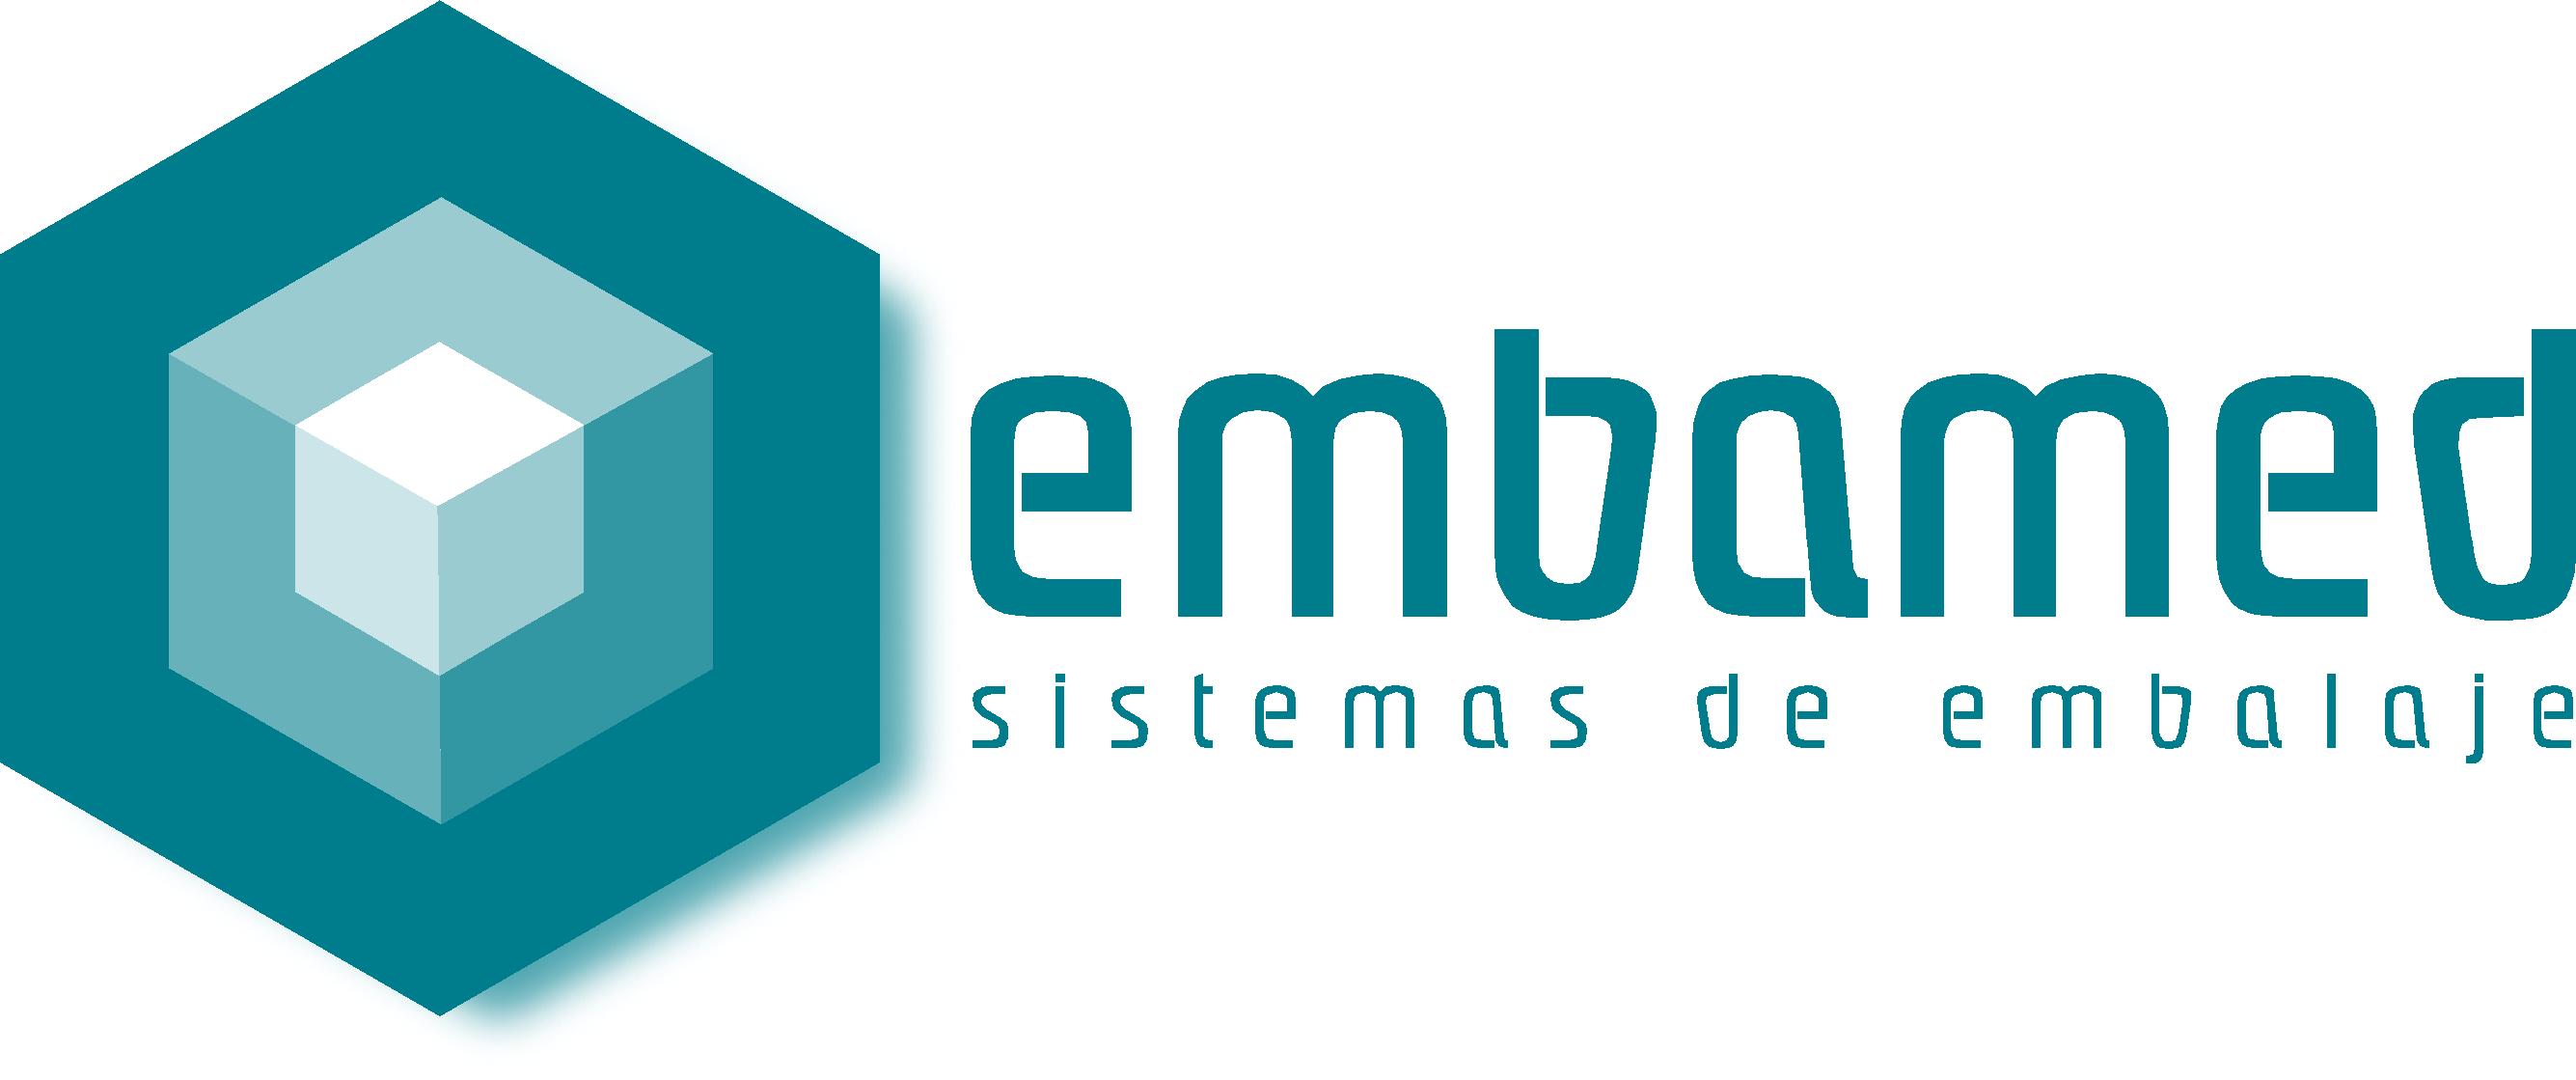 Geami - Sistemas de embalaje para tiendas online - Embamed Packaging S.L.